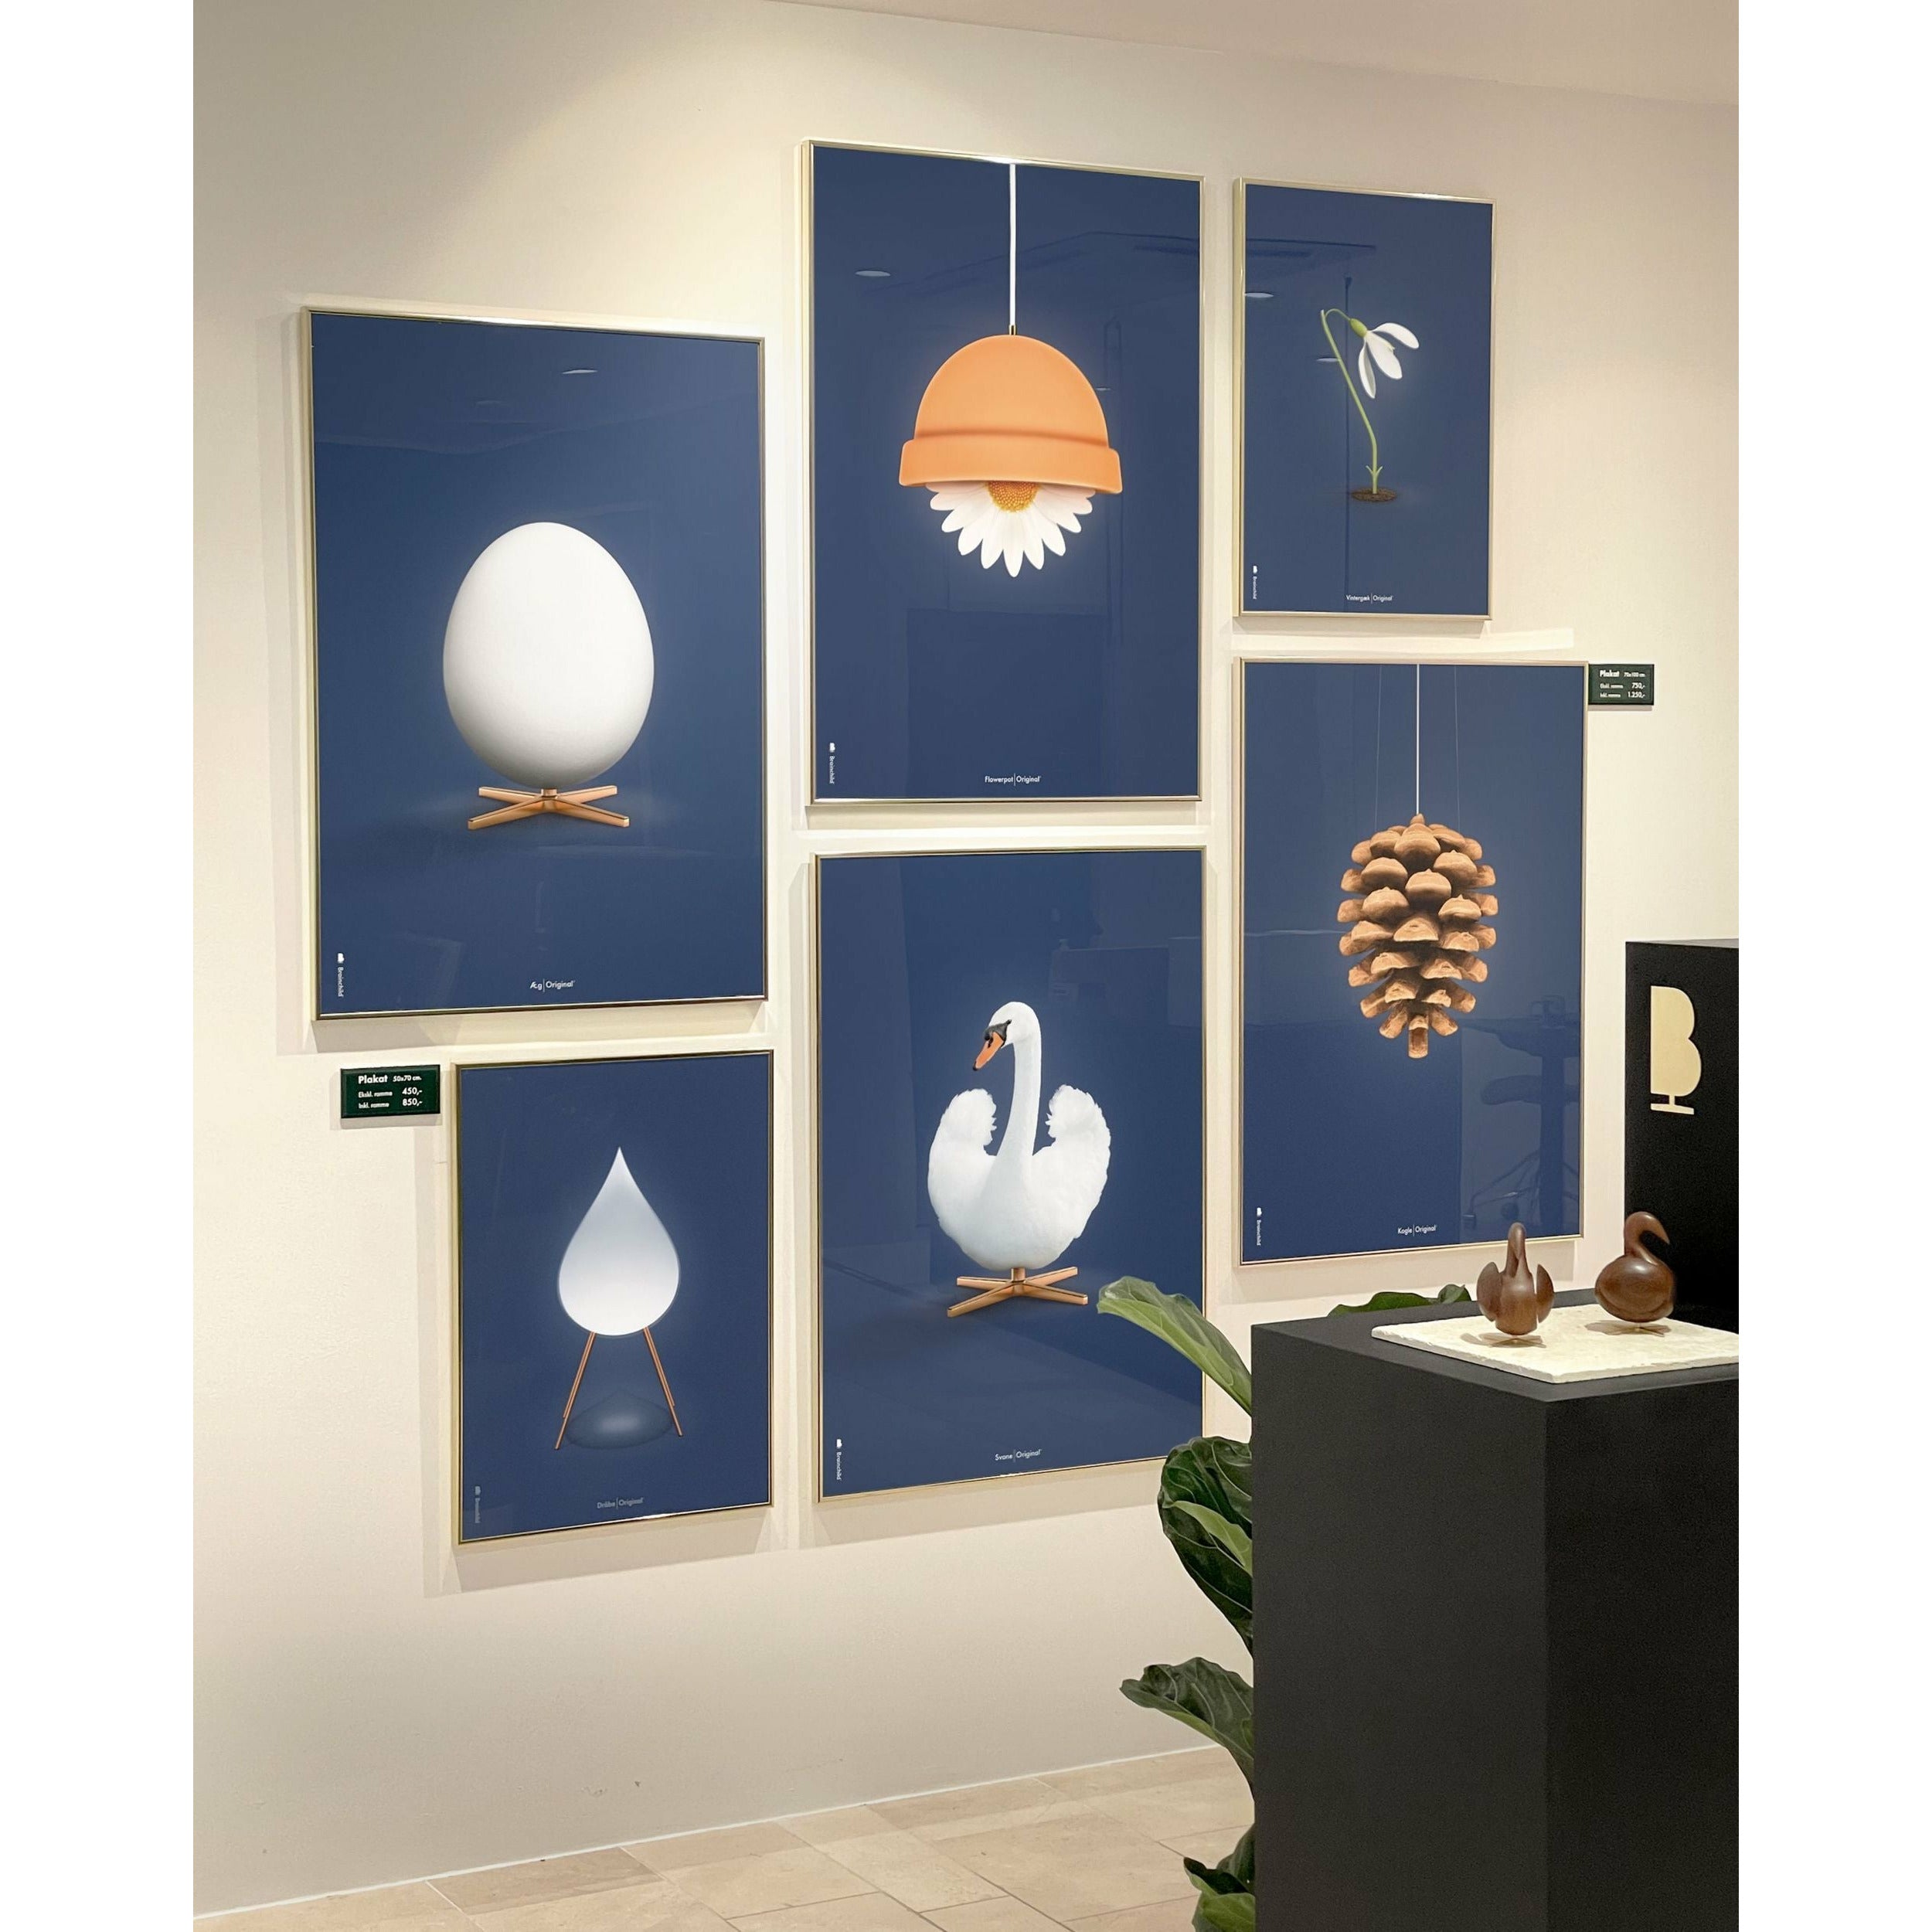 Brainchild Swan Classic Poster, Light Wood Frame A5, Dark Blue Background